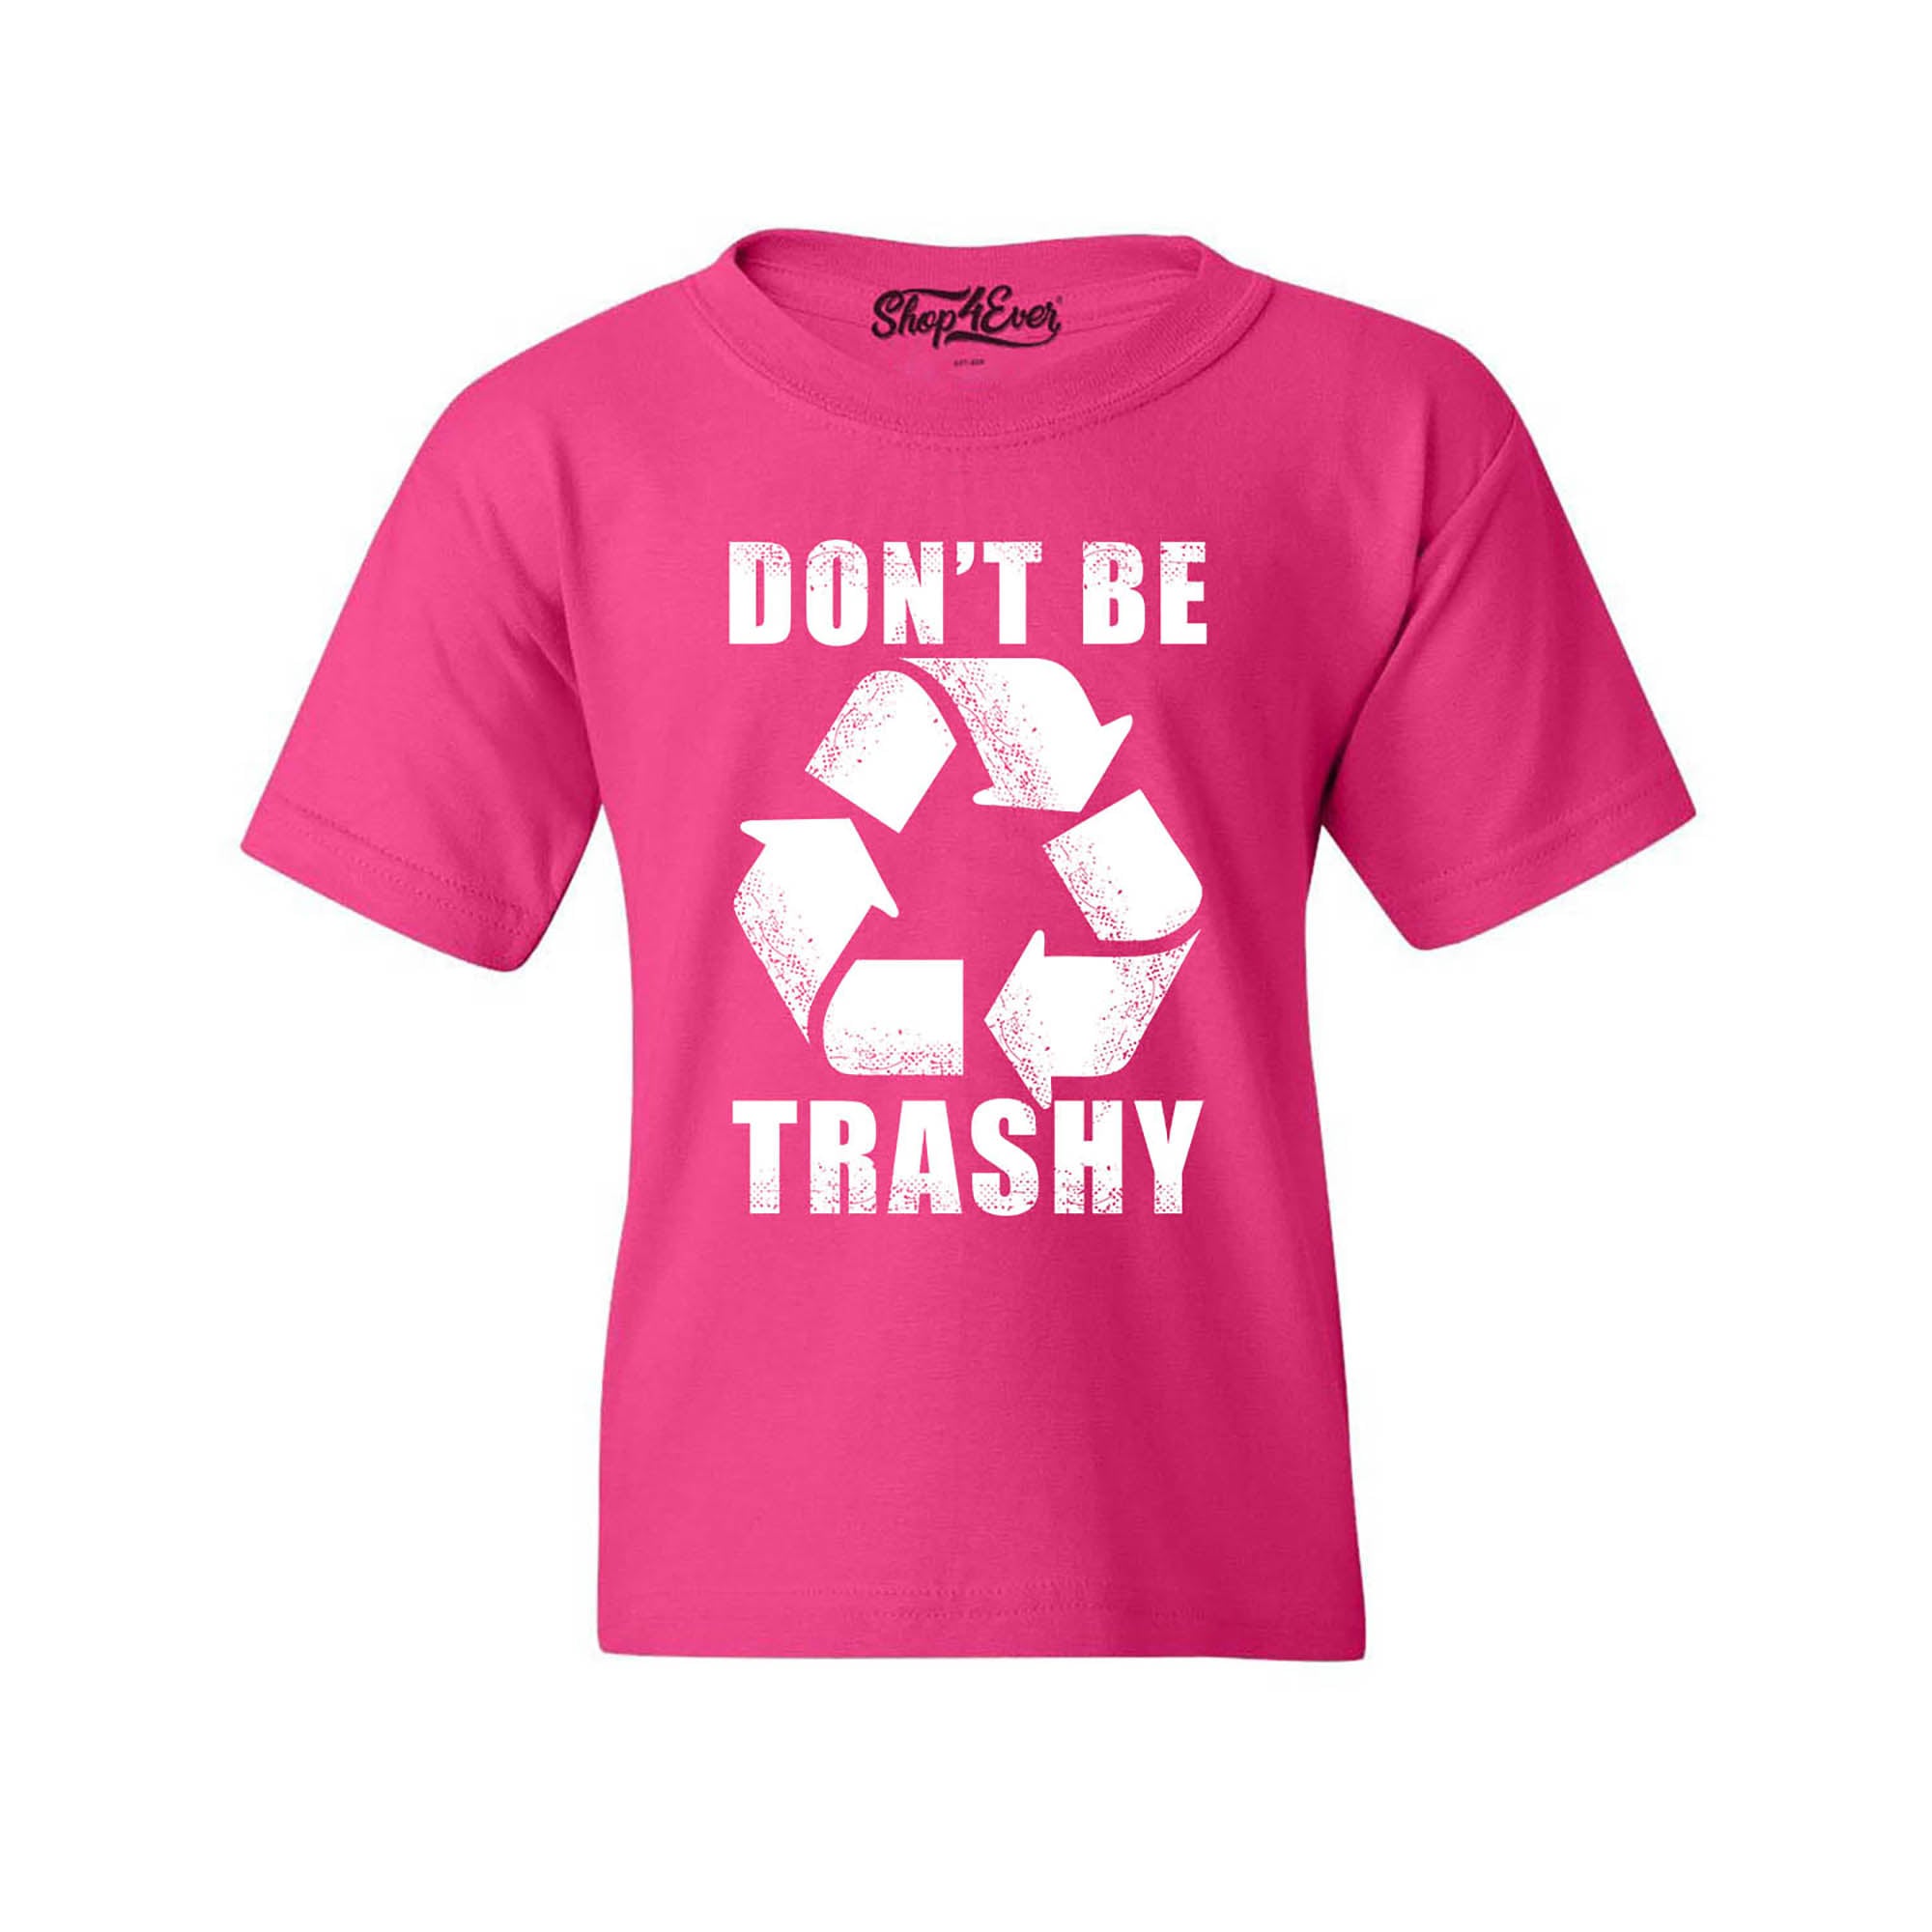 Don't Be Trashy Kids Child Tee Environmental Youth's T-Shirt